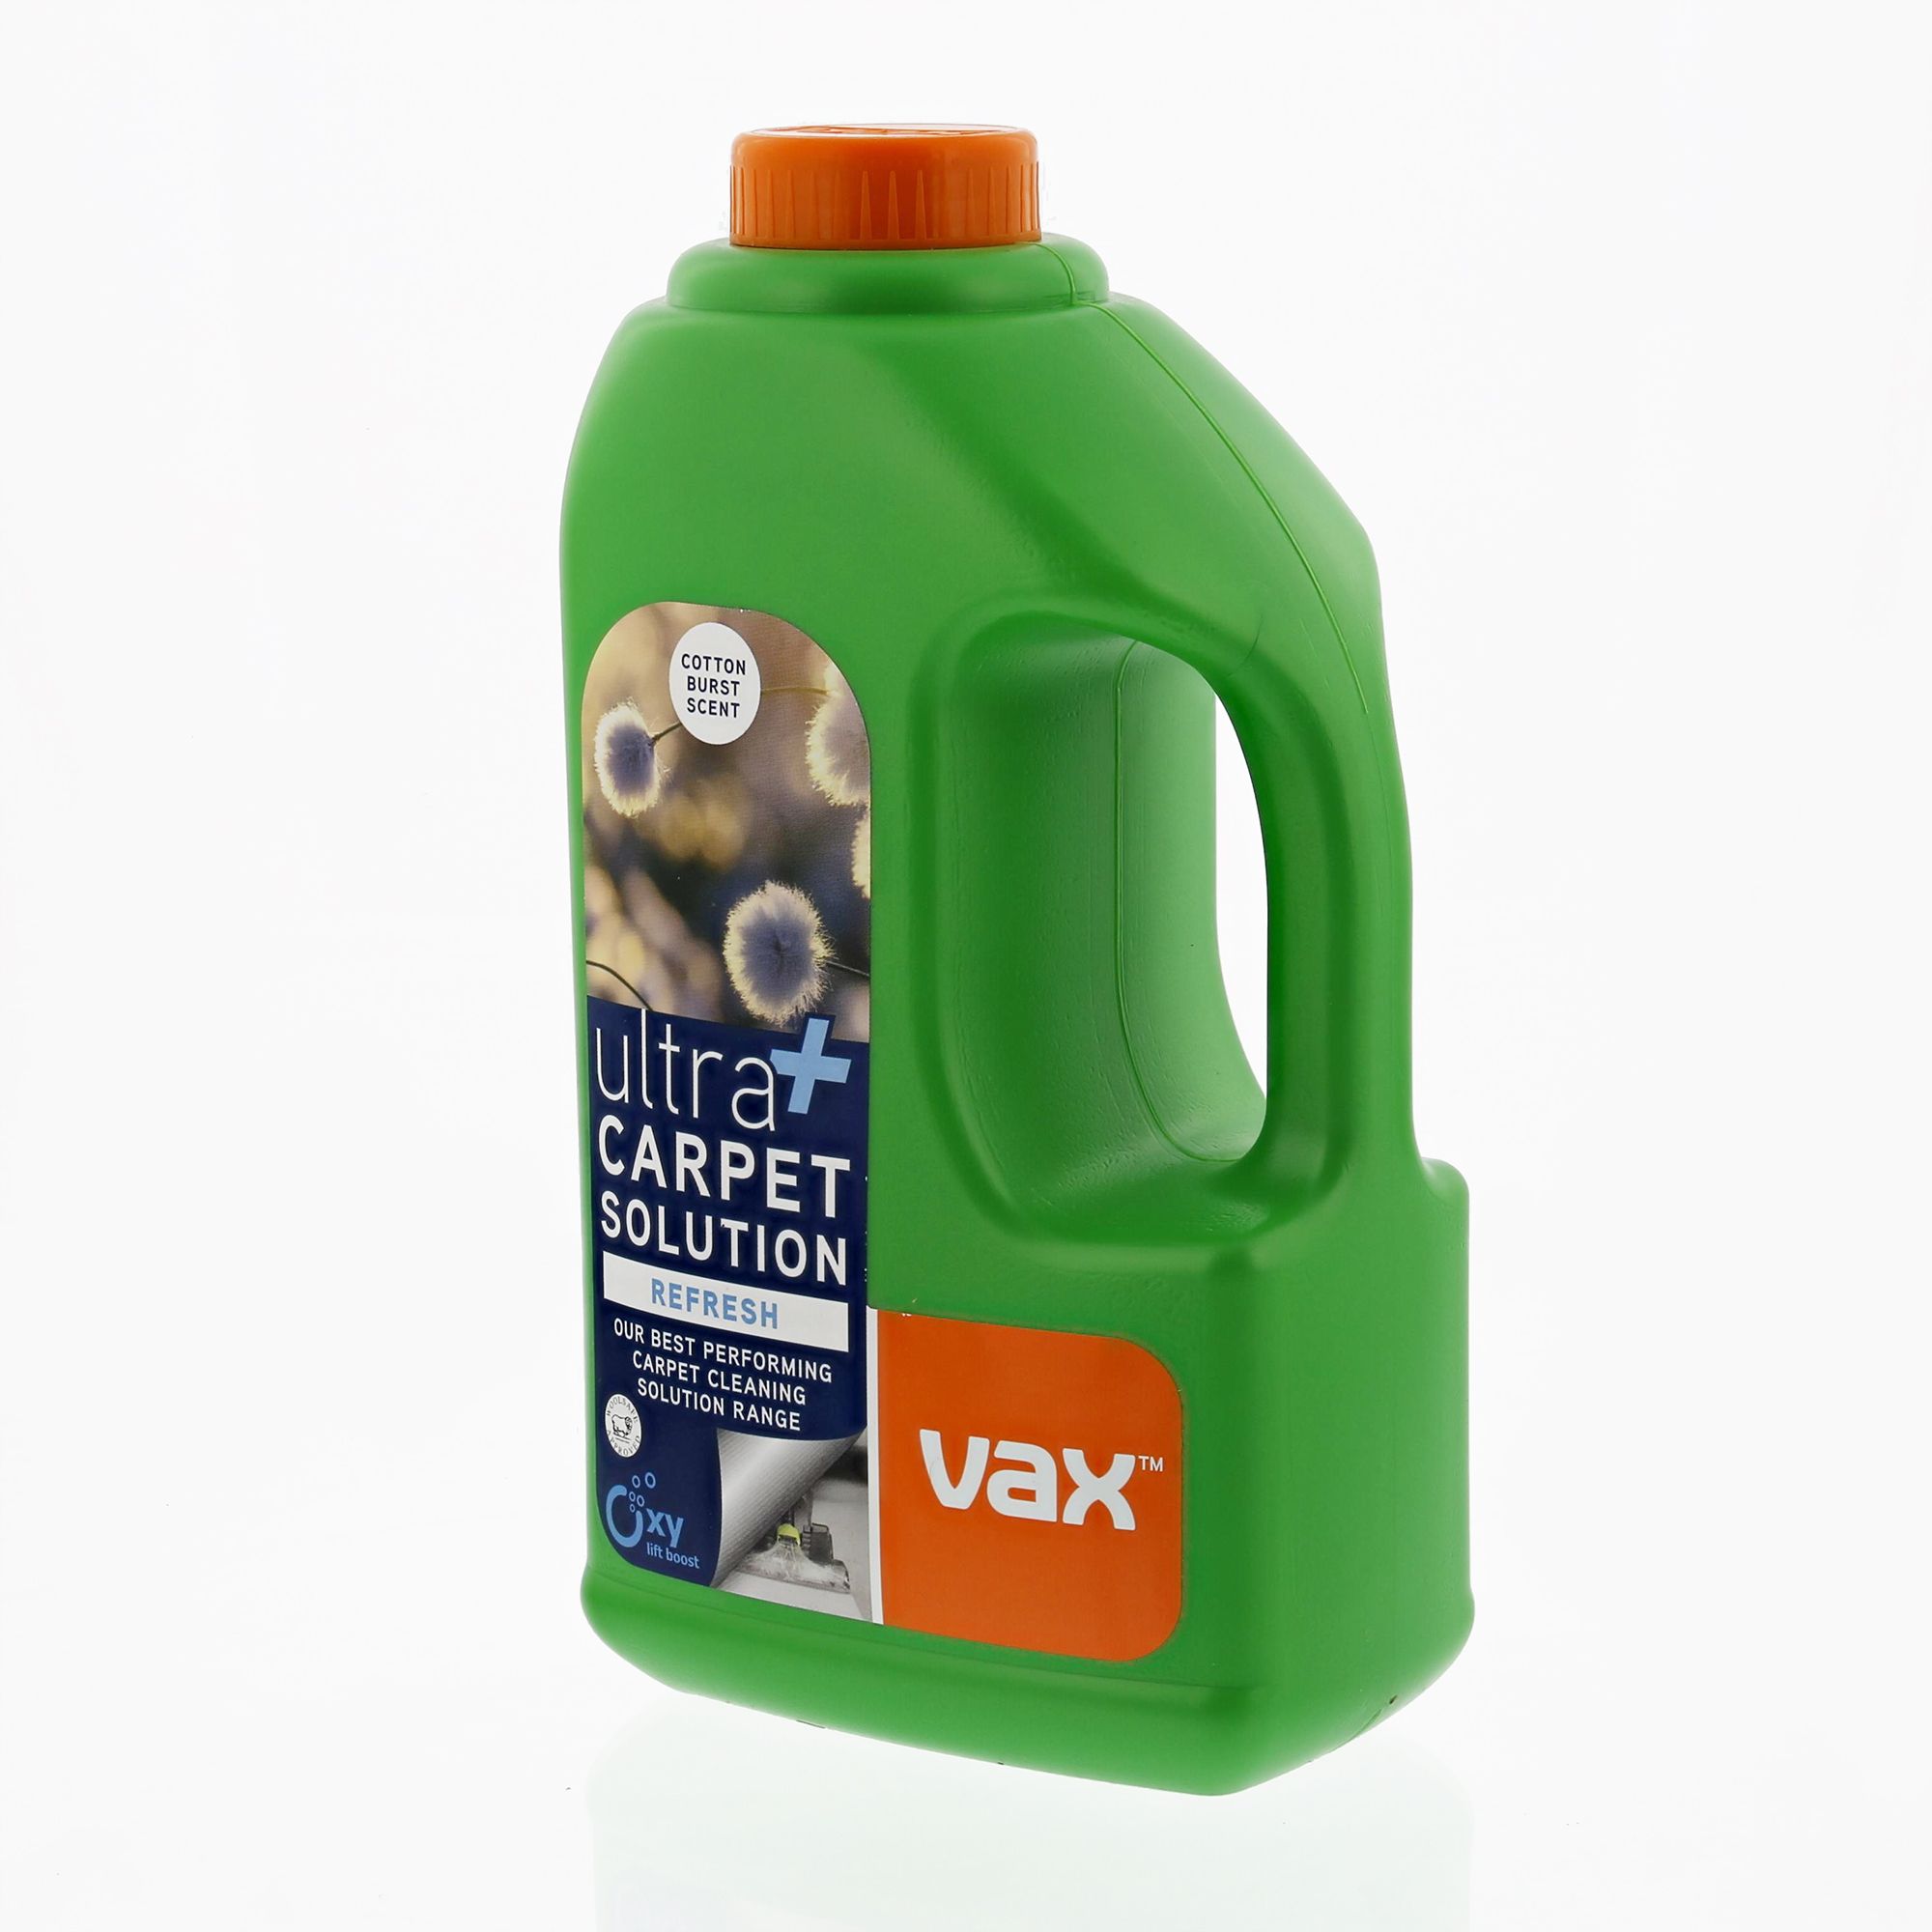 Vax Ultra+ Refresh Cotton Burst Carpet Cleaner, 1.5L